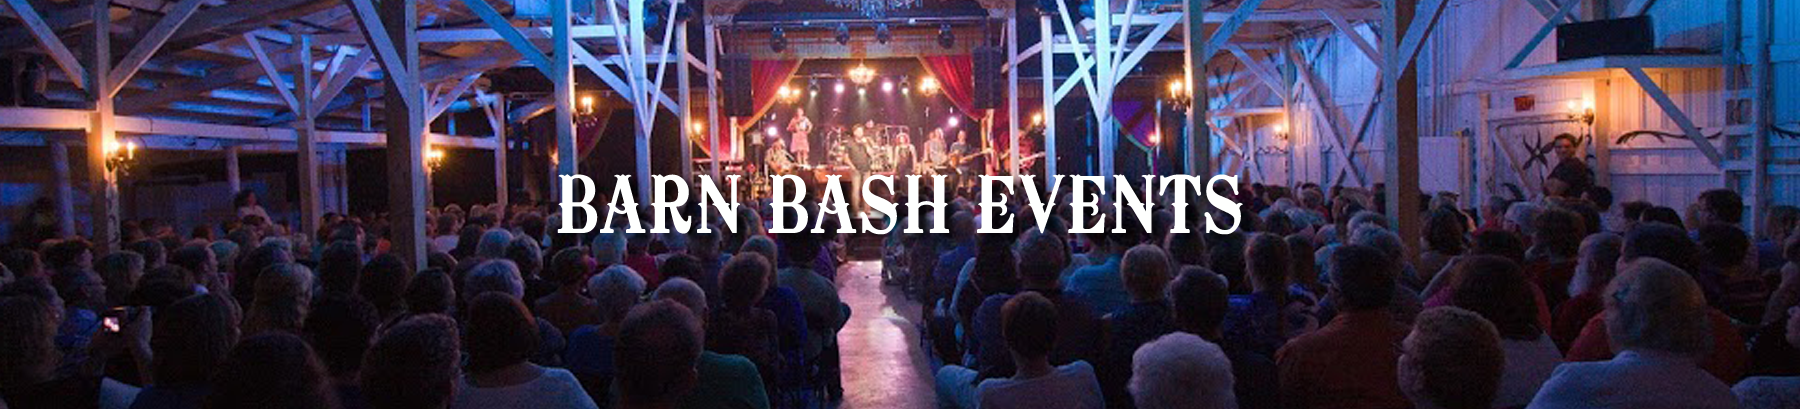 Barn Bash Events - David Phelps